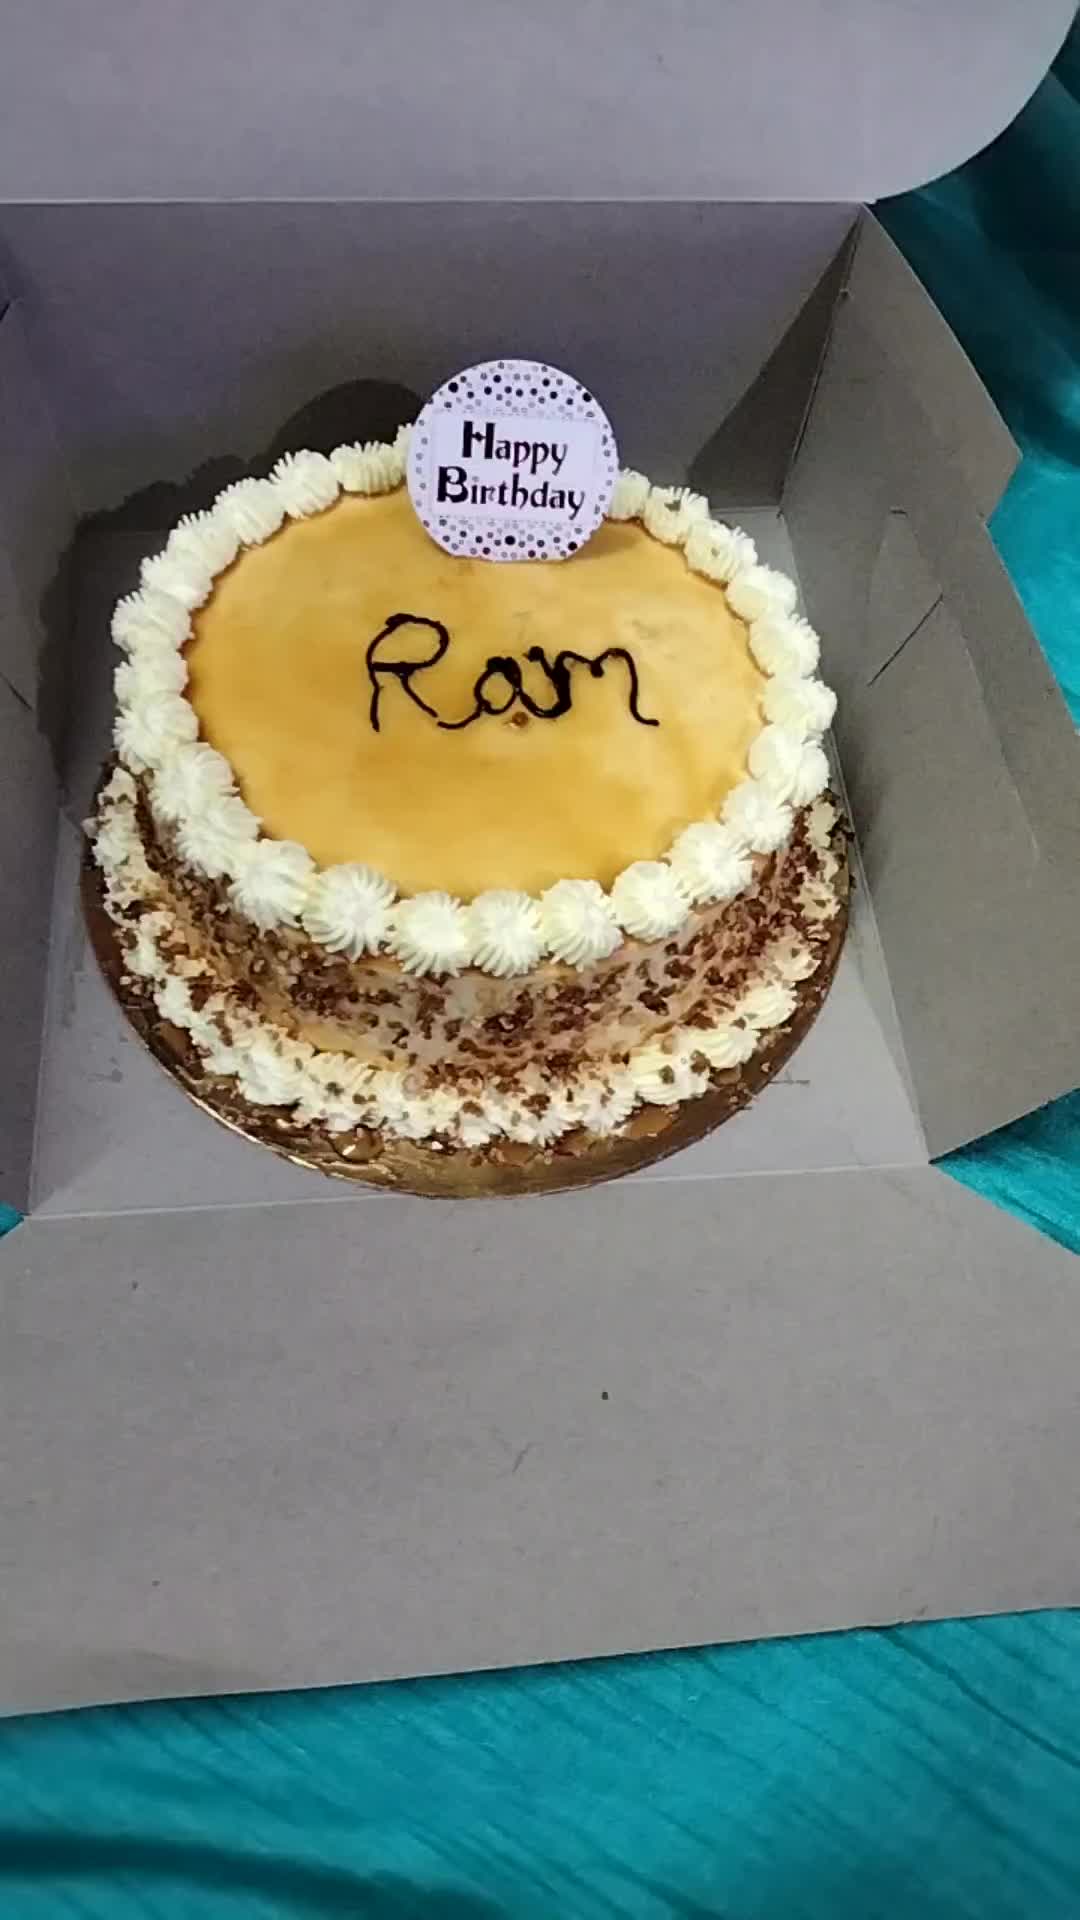 Sai Dharam Tej Cake Cutting at Ram Charan's Birthday Celebrations |  Gulte.com - YouTube